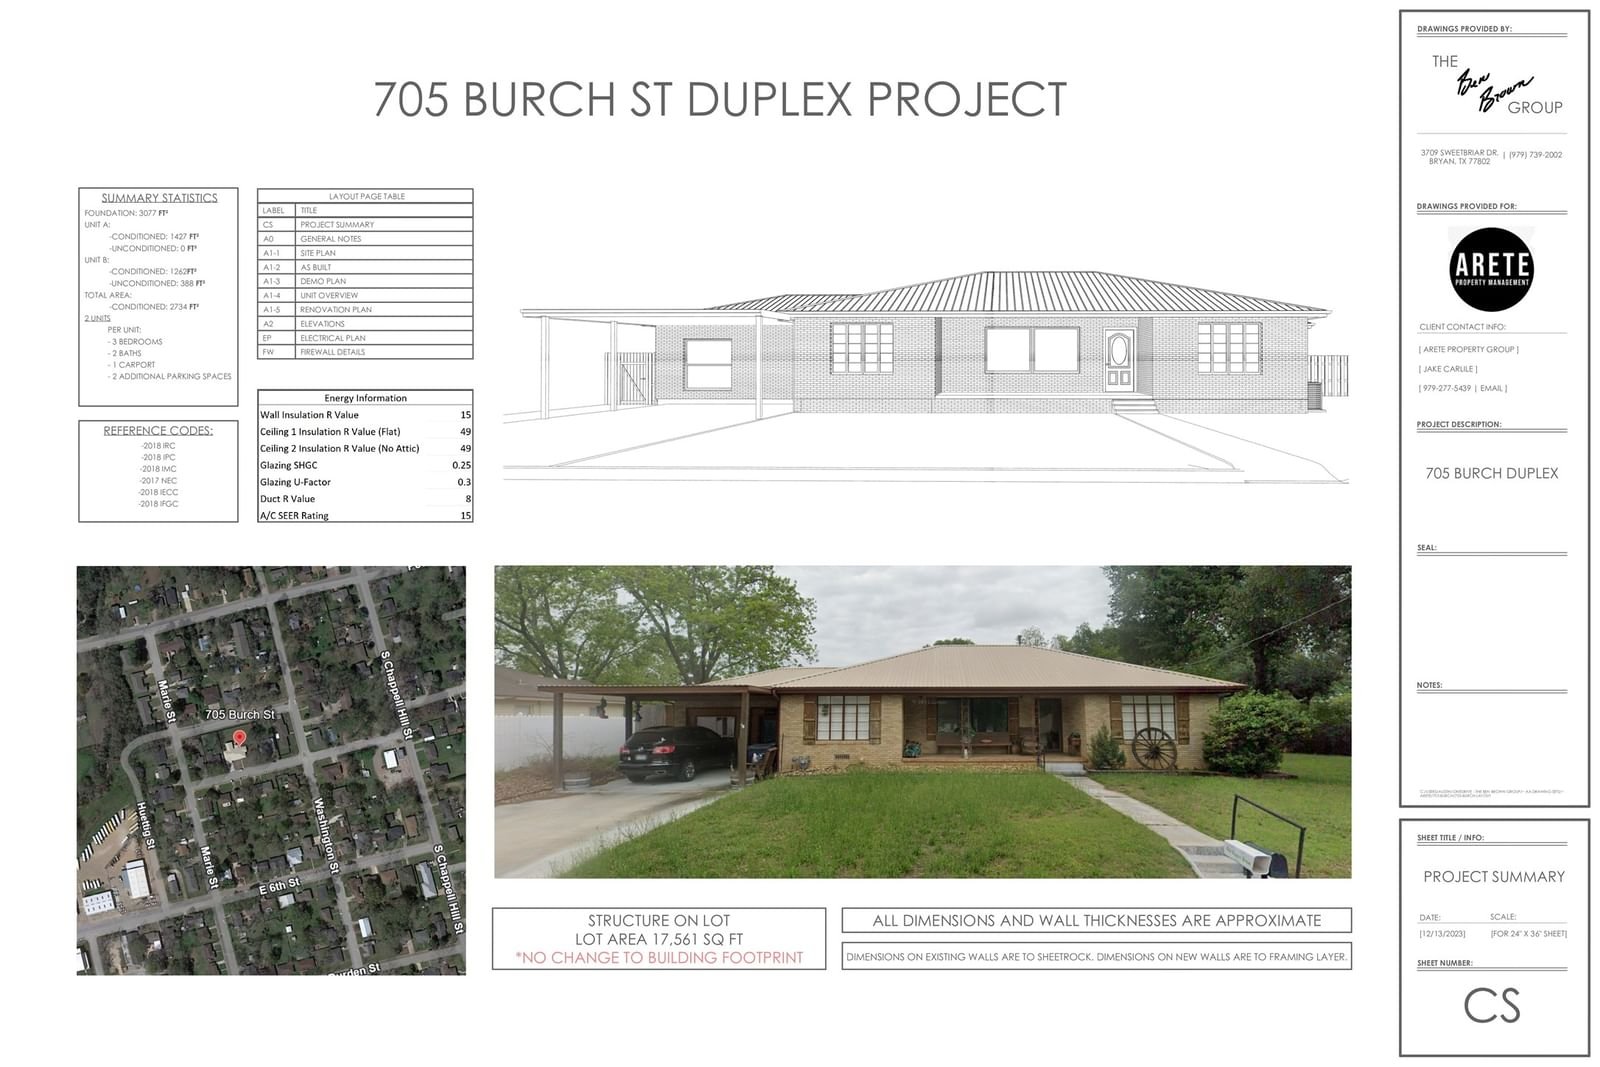 Real estate property located at 705 Burch, Washington, Durden Courts, Brenham, TX, US